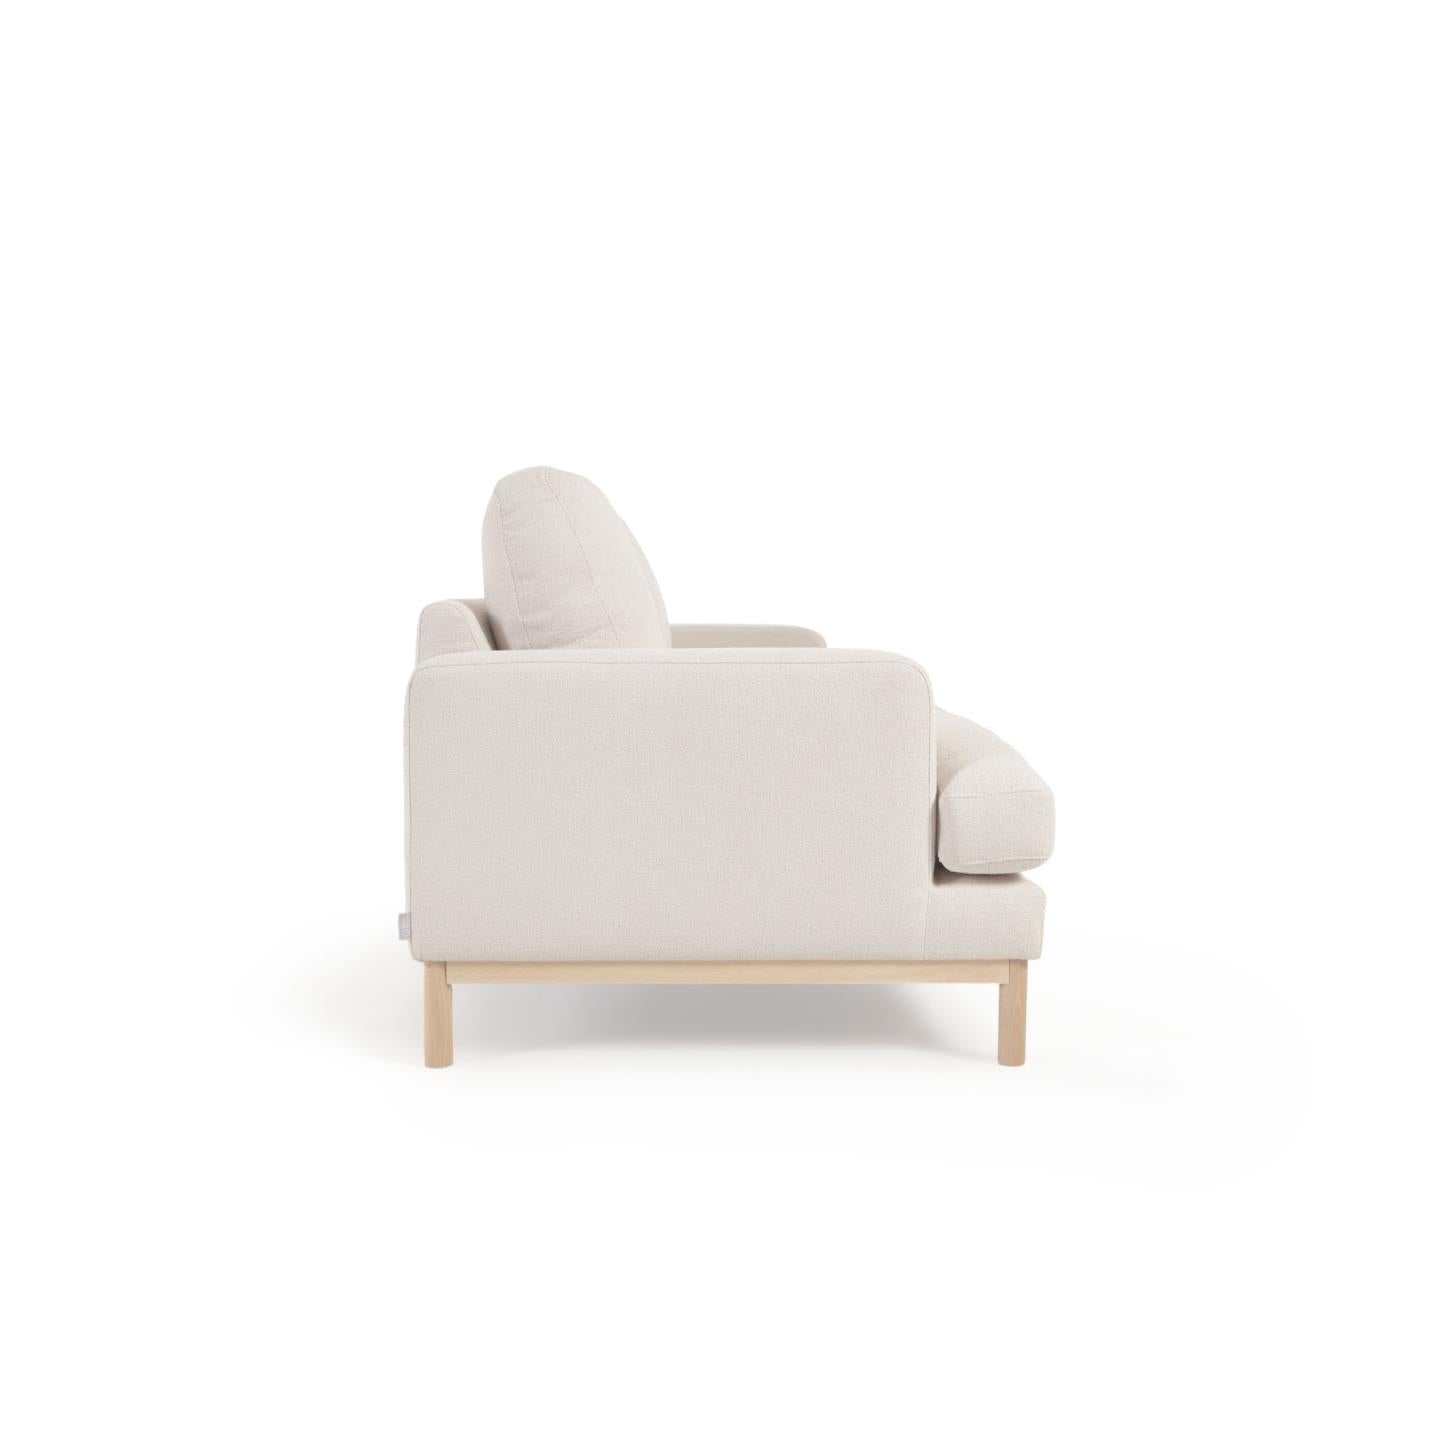 Mihaela 3 seater sofa in white fleece, 203 cm